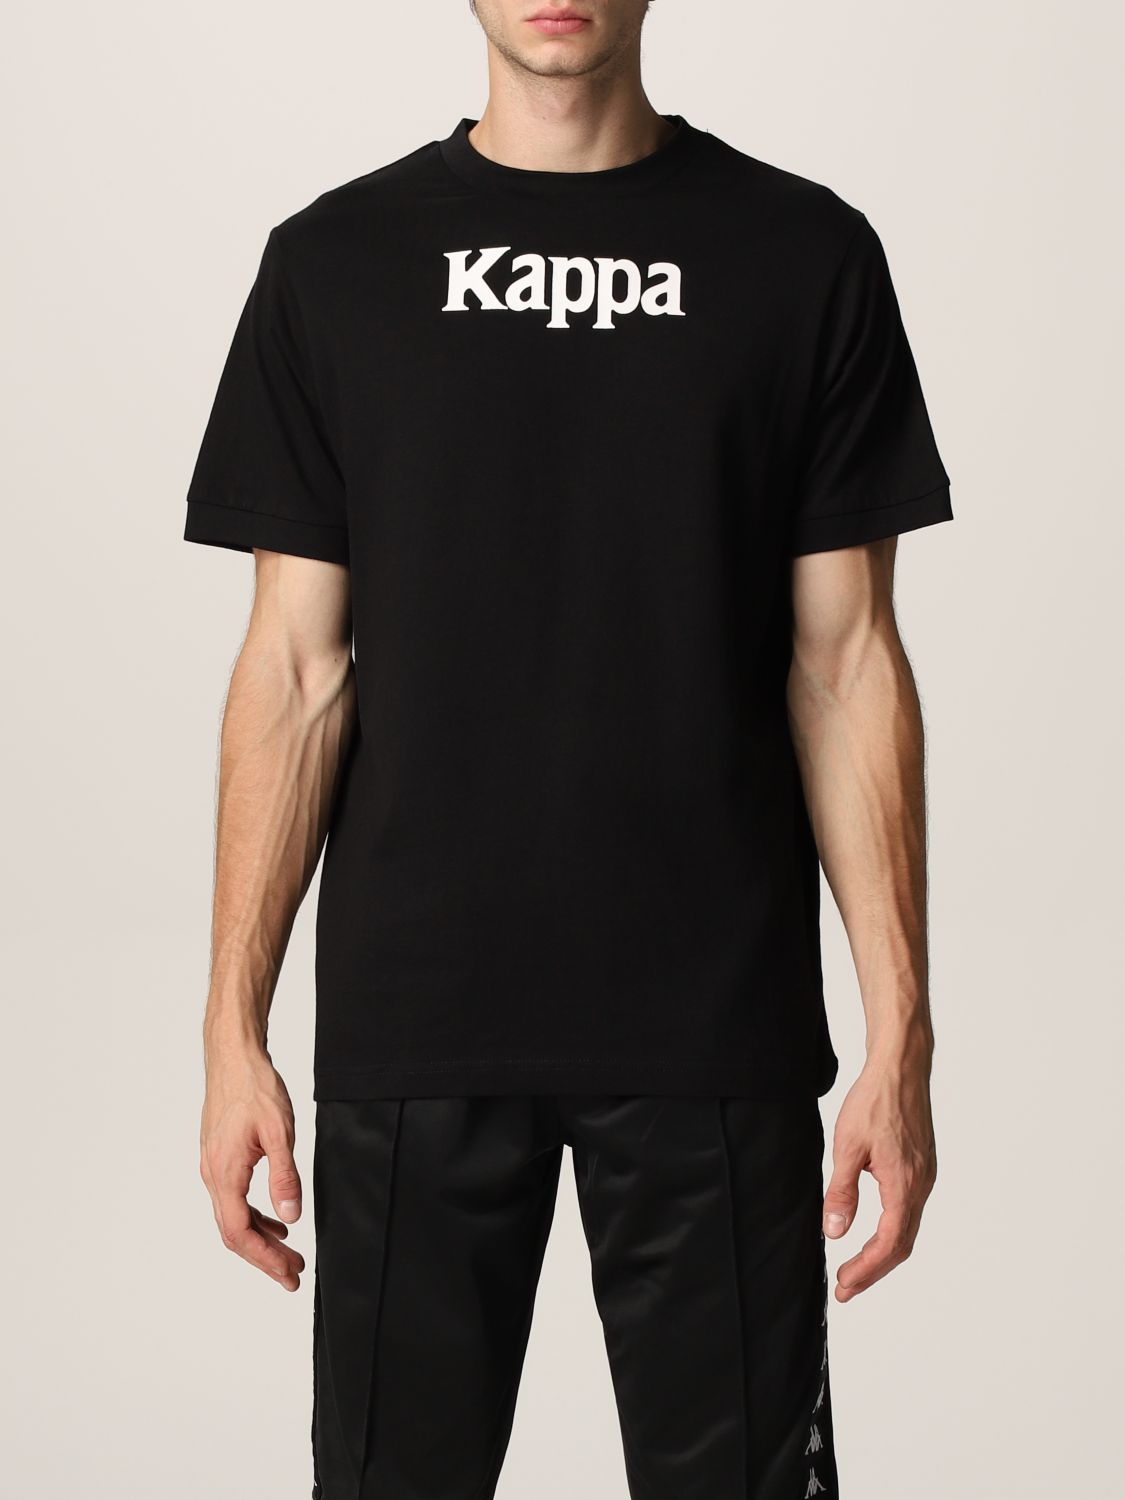 kappa t shirt white